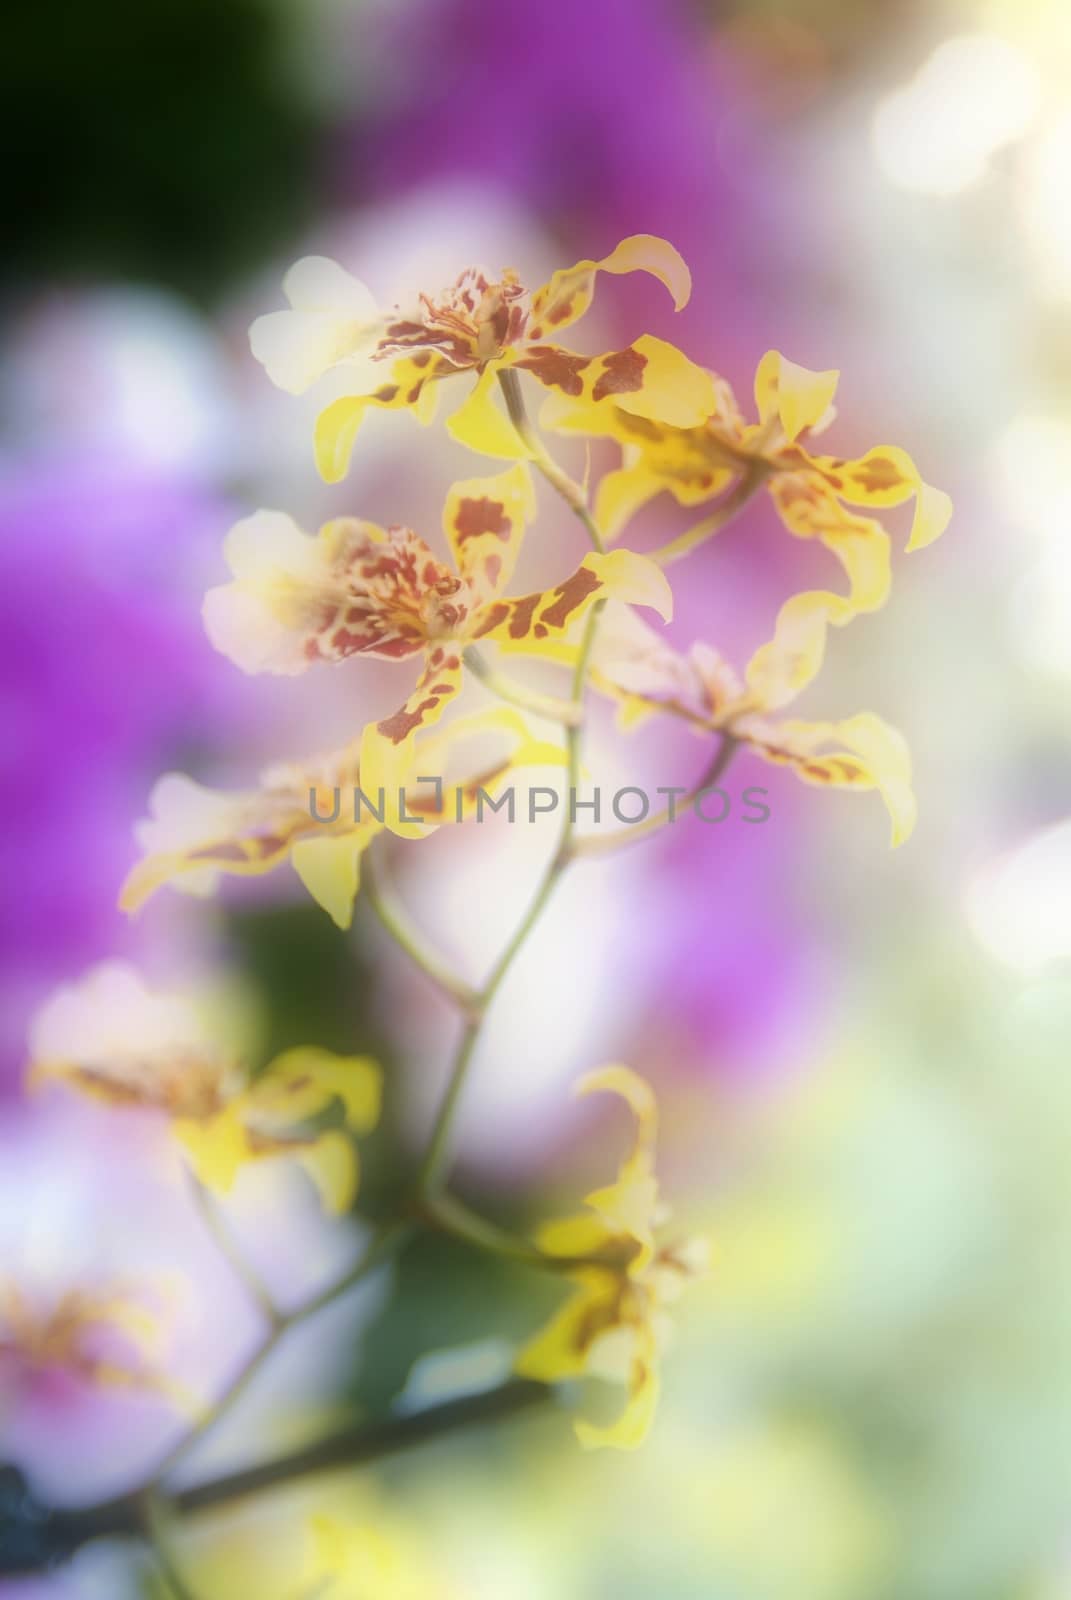 purple orchid, very beautifoul by romeocharly